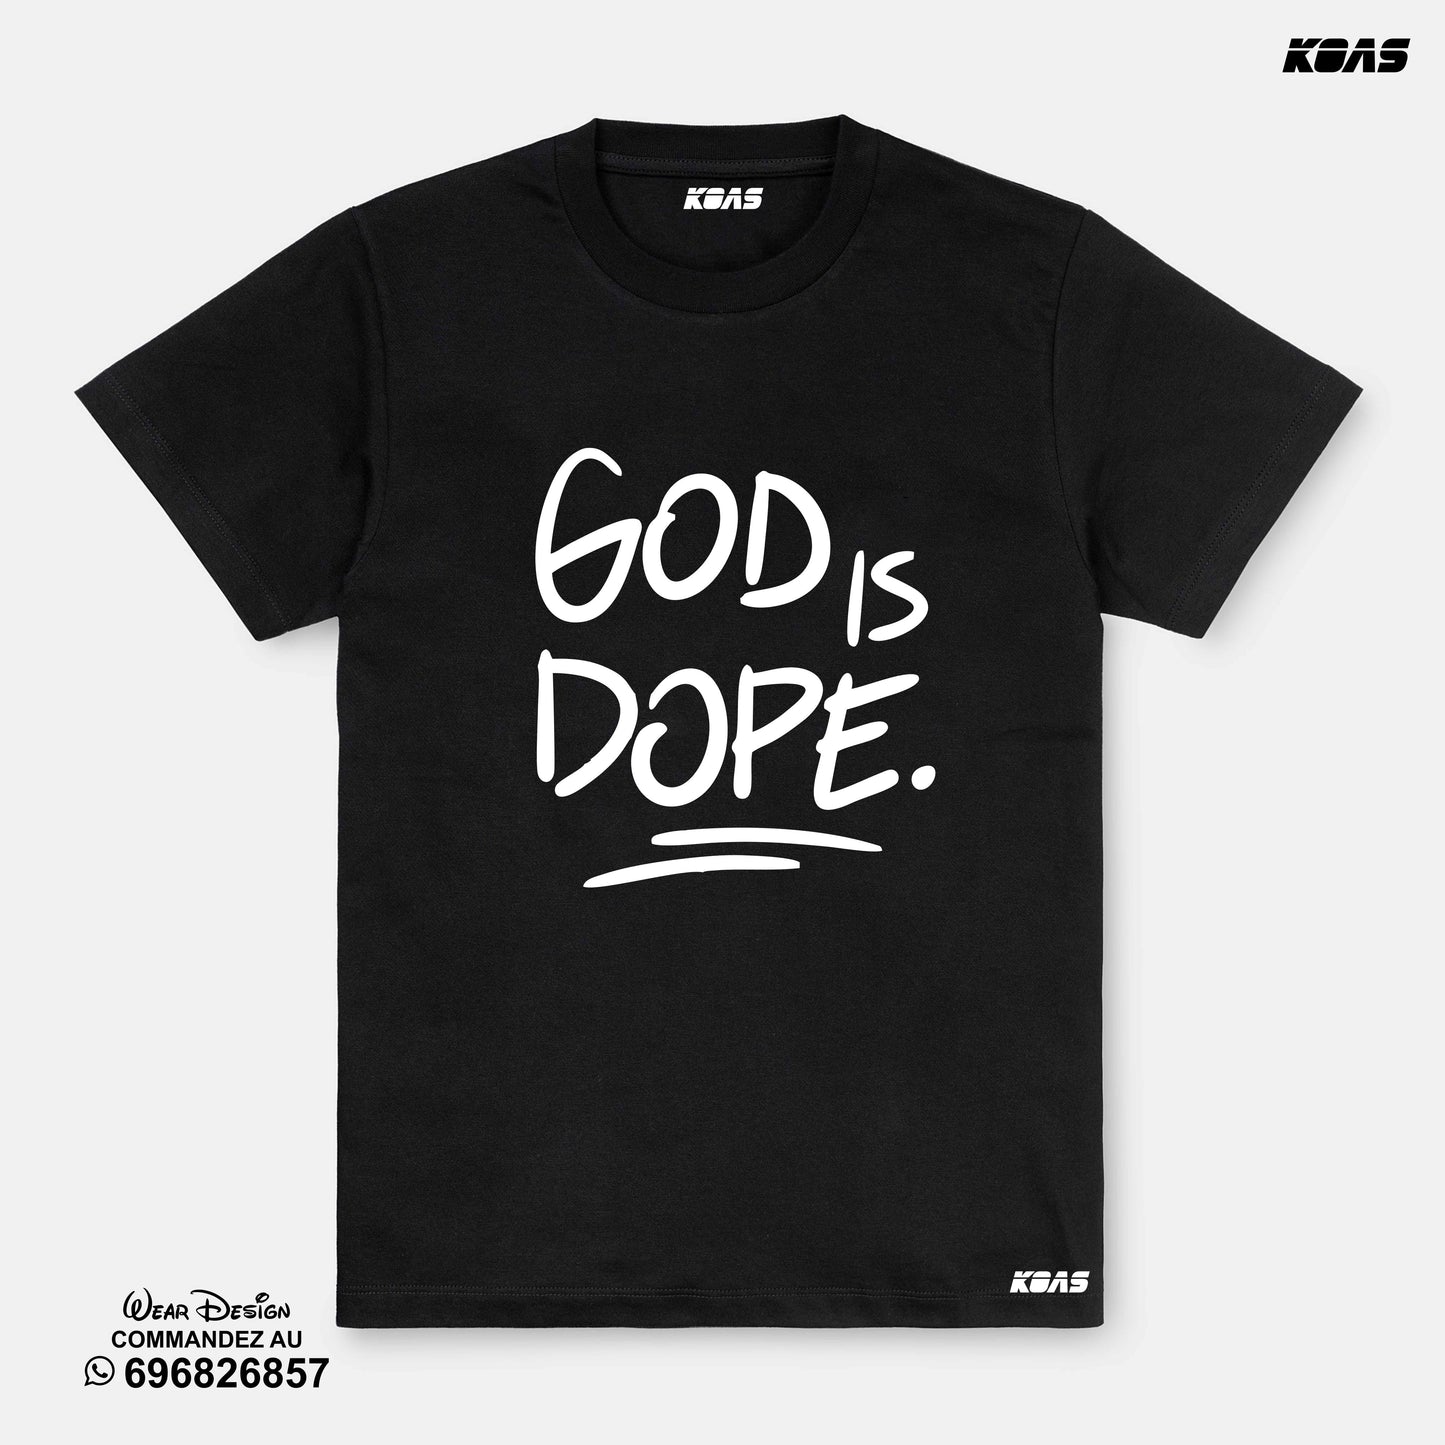 God is dope - Tshirt